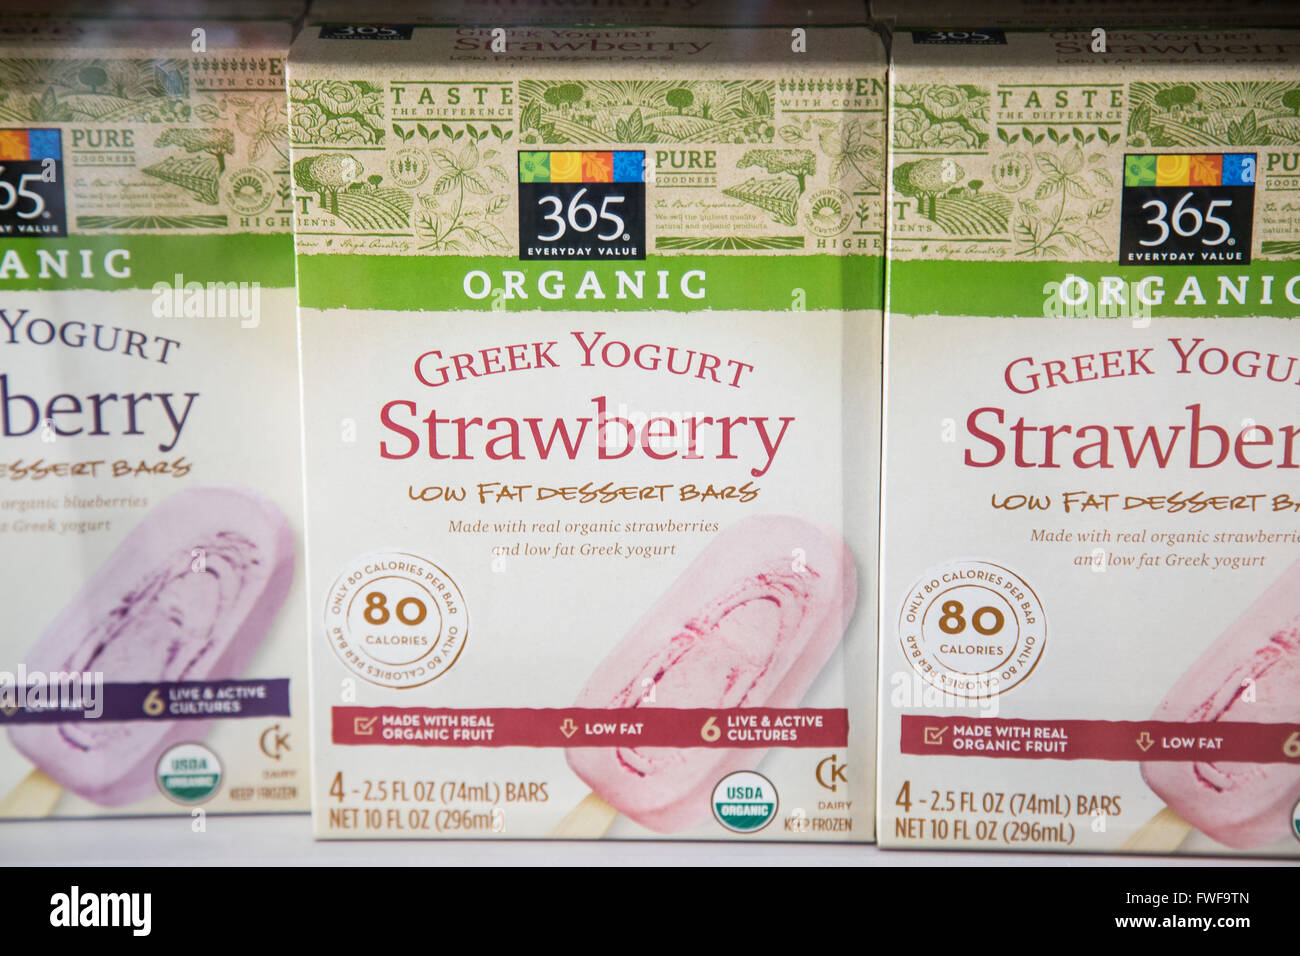 A box of Whole Foods brand 365 organic frozen greek yogurt dessert bars. Stock Photo